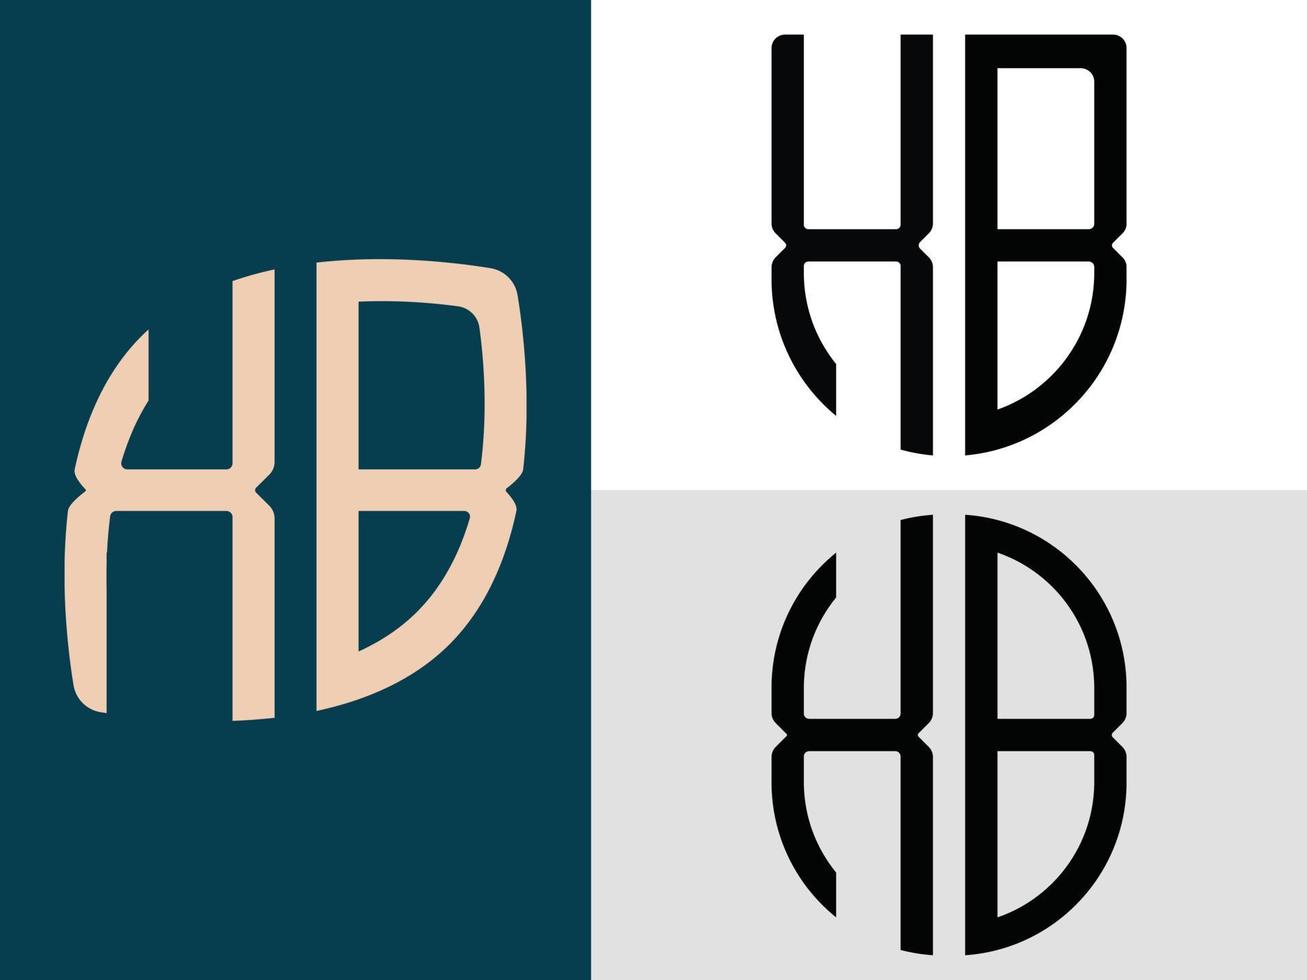 kreative anfangsbuchstaben xb logo designs paket. vektor